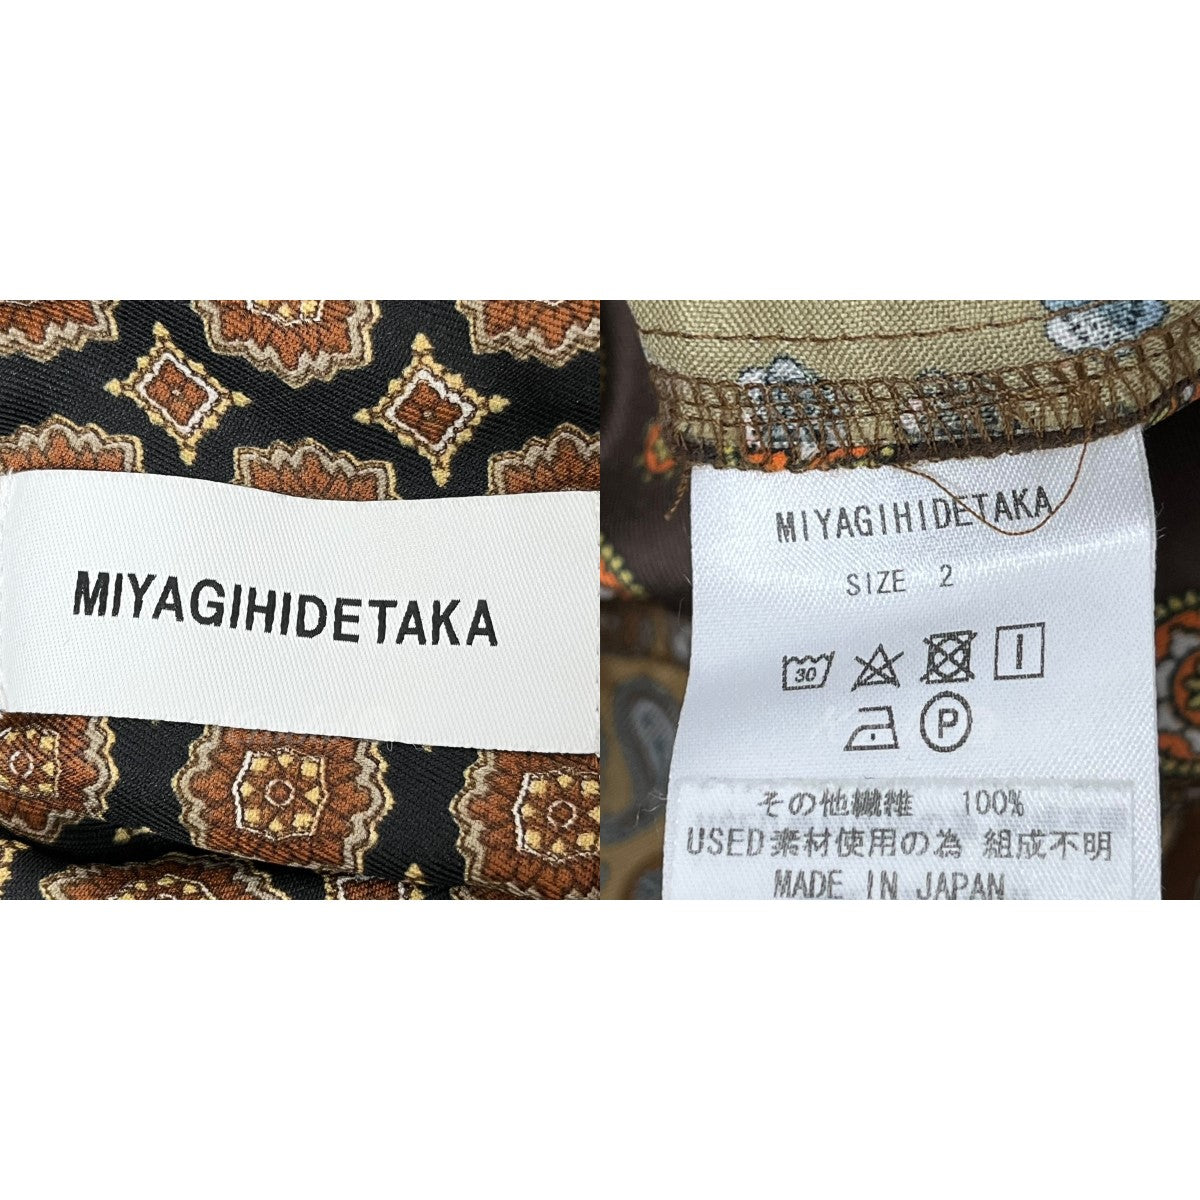 MIYAGIHIDETAKA(ミヤギヒデタカ) パッチワークシャツ